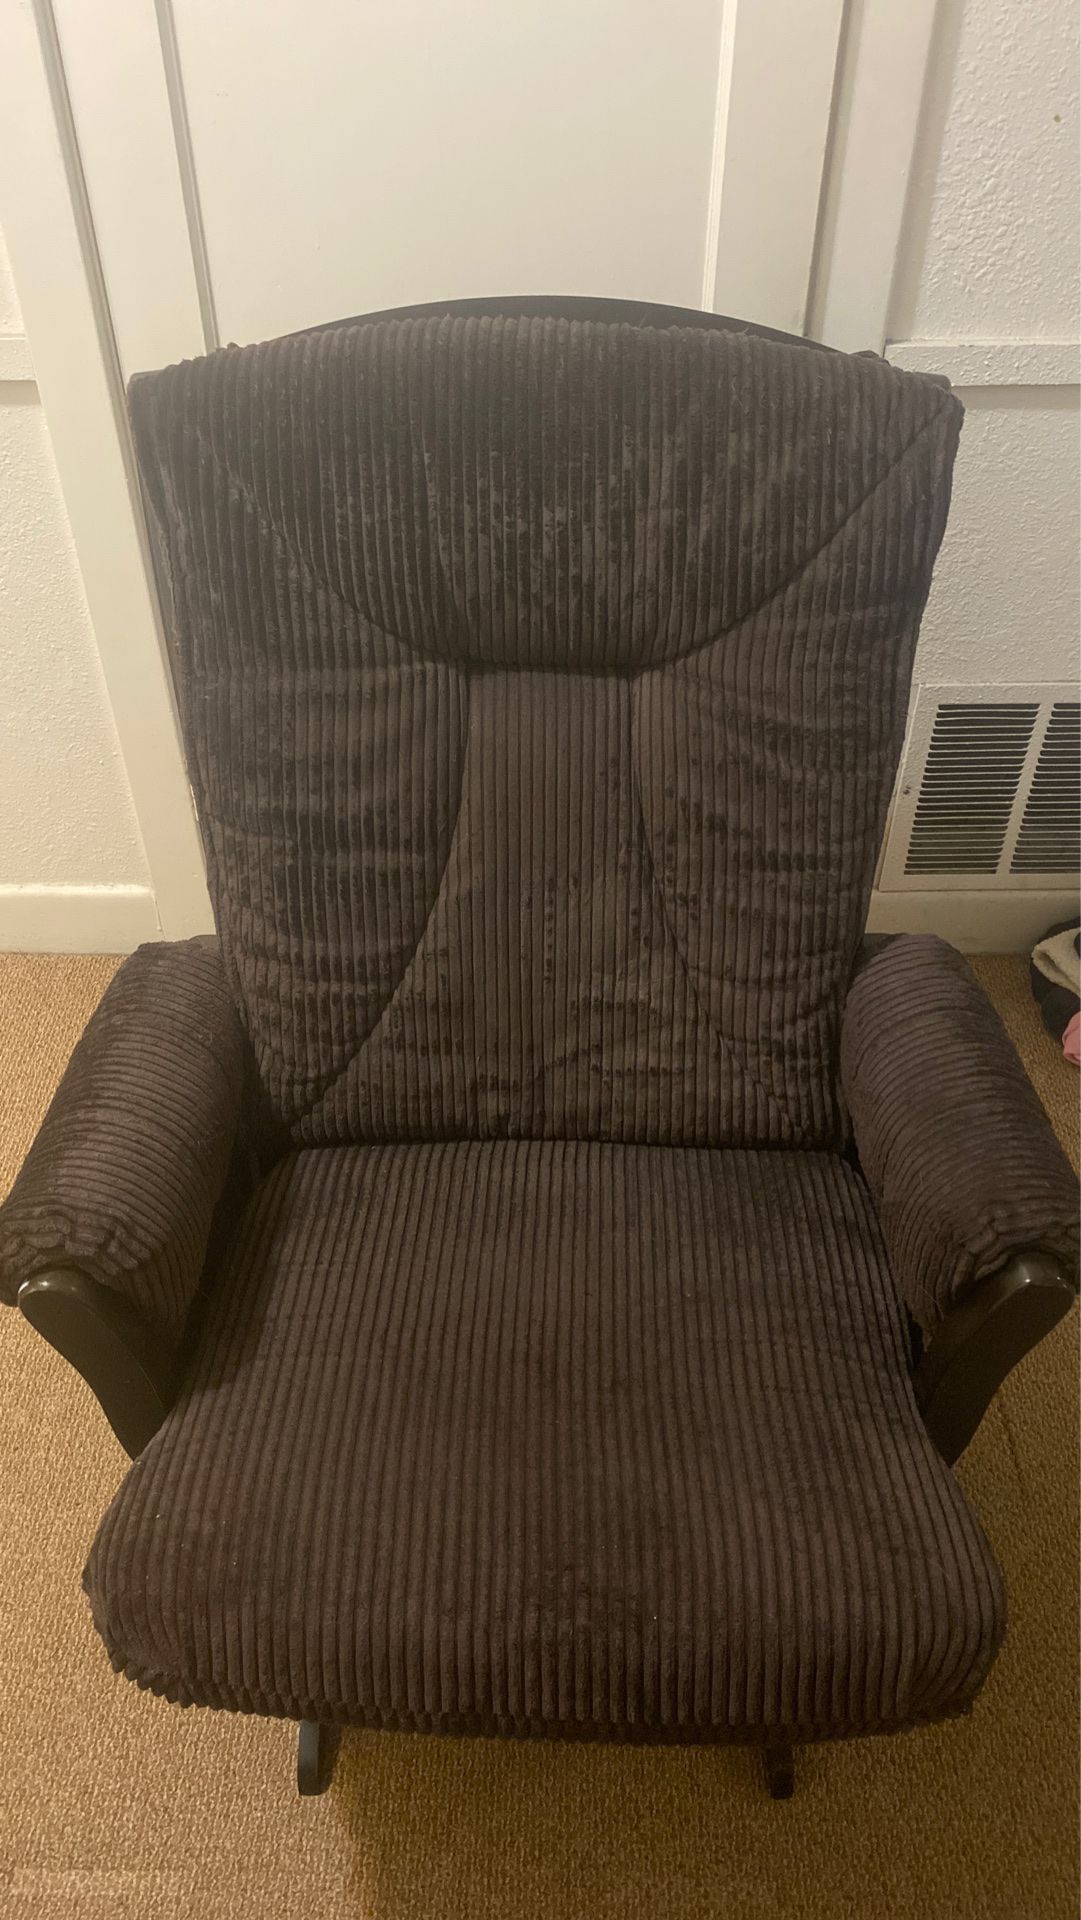 Rocking chair, 20$